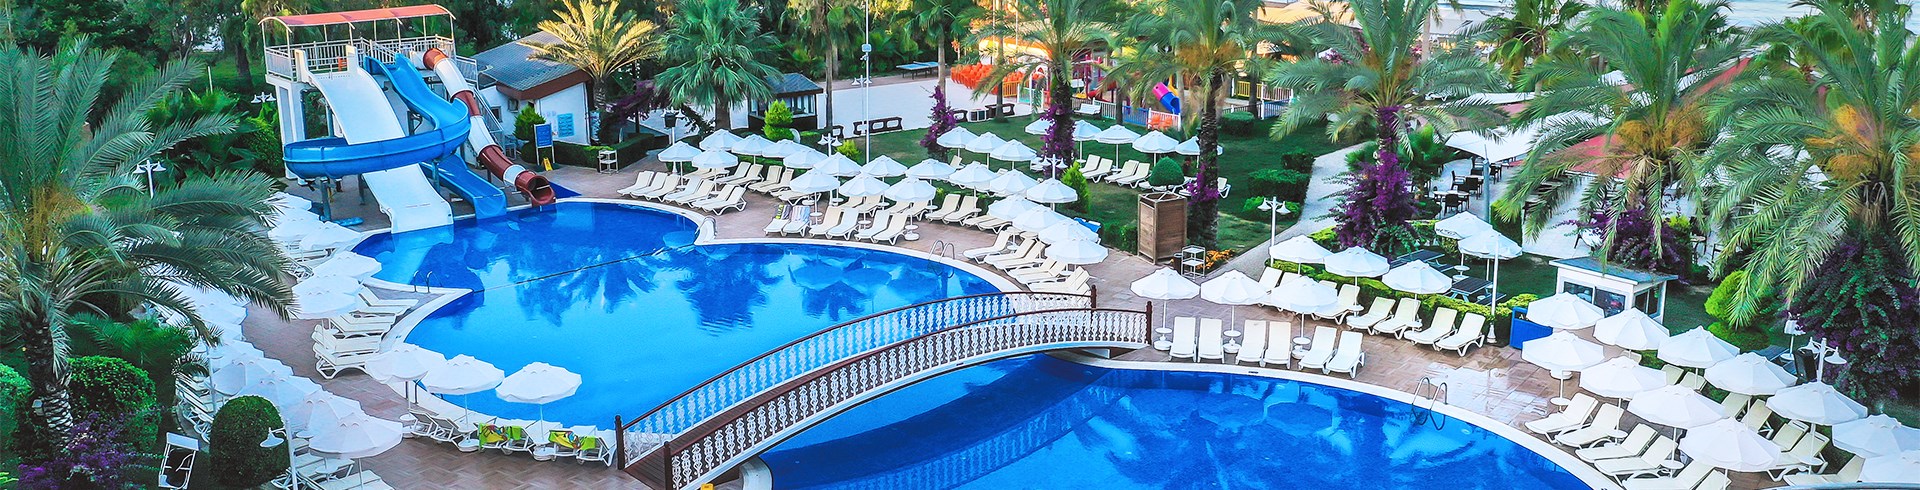 Annabella Diamond Hotel Spa, Alanya - Travel